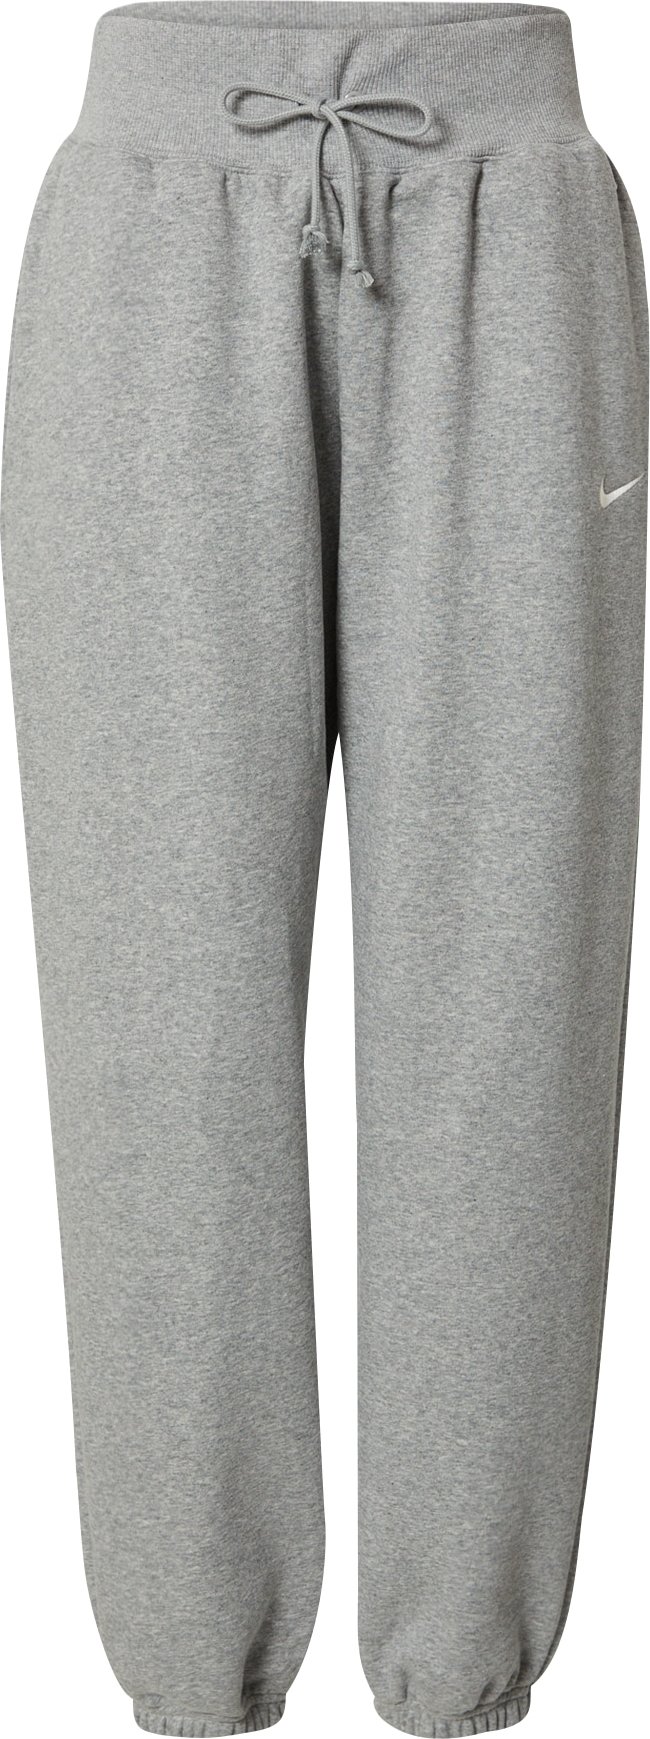 Kalhoty Nike Sportswear šedý melír